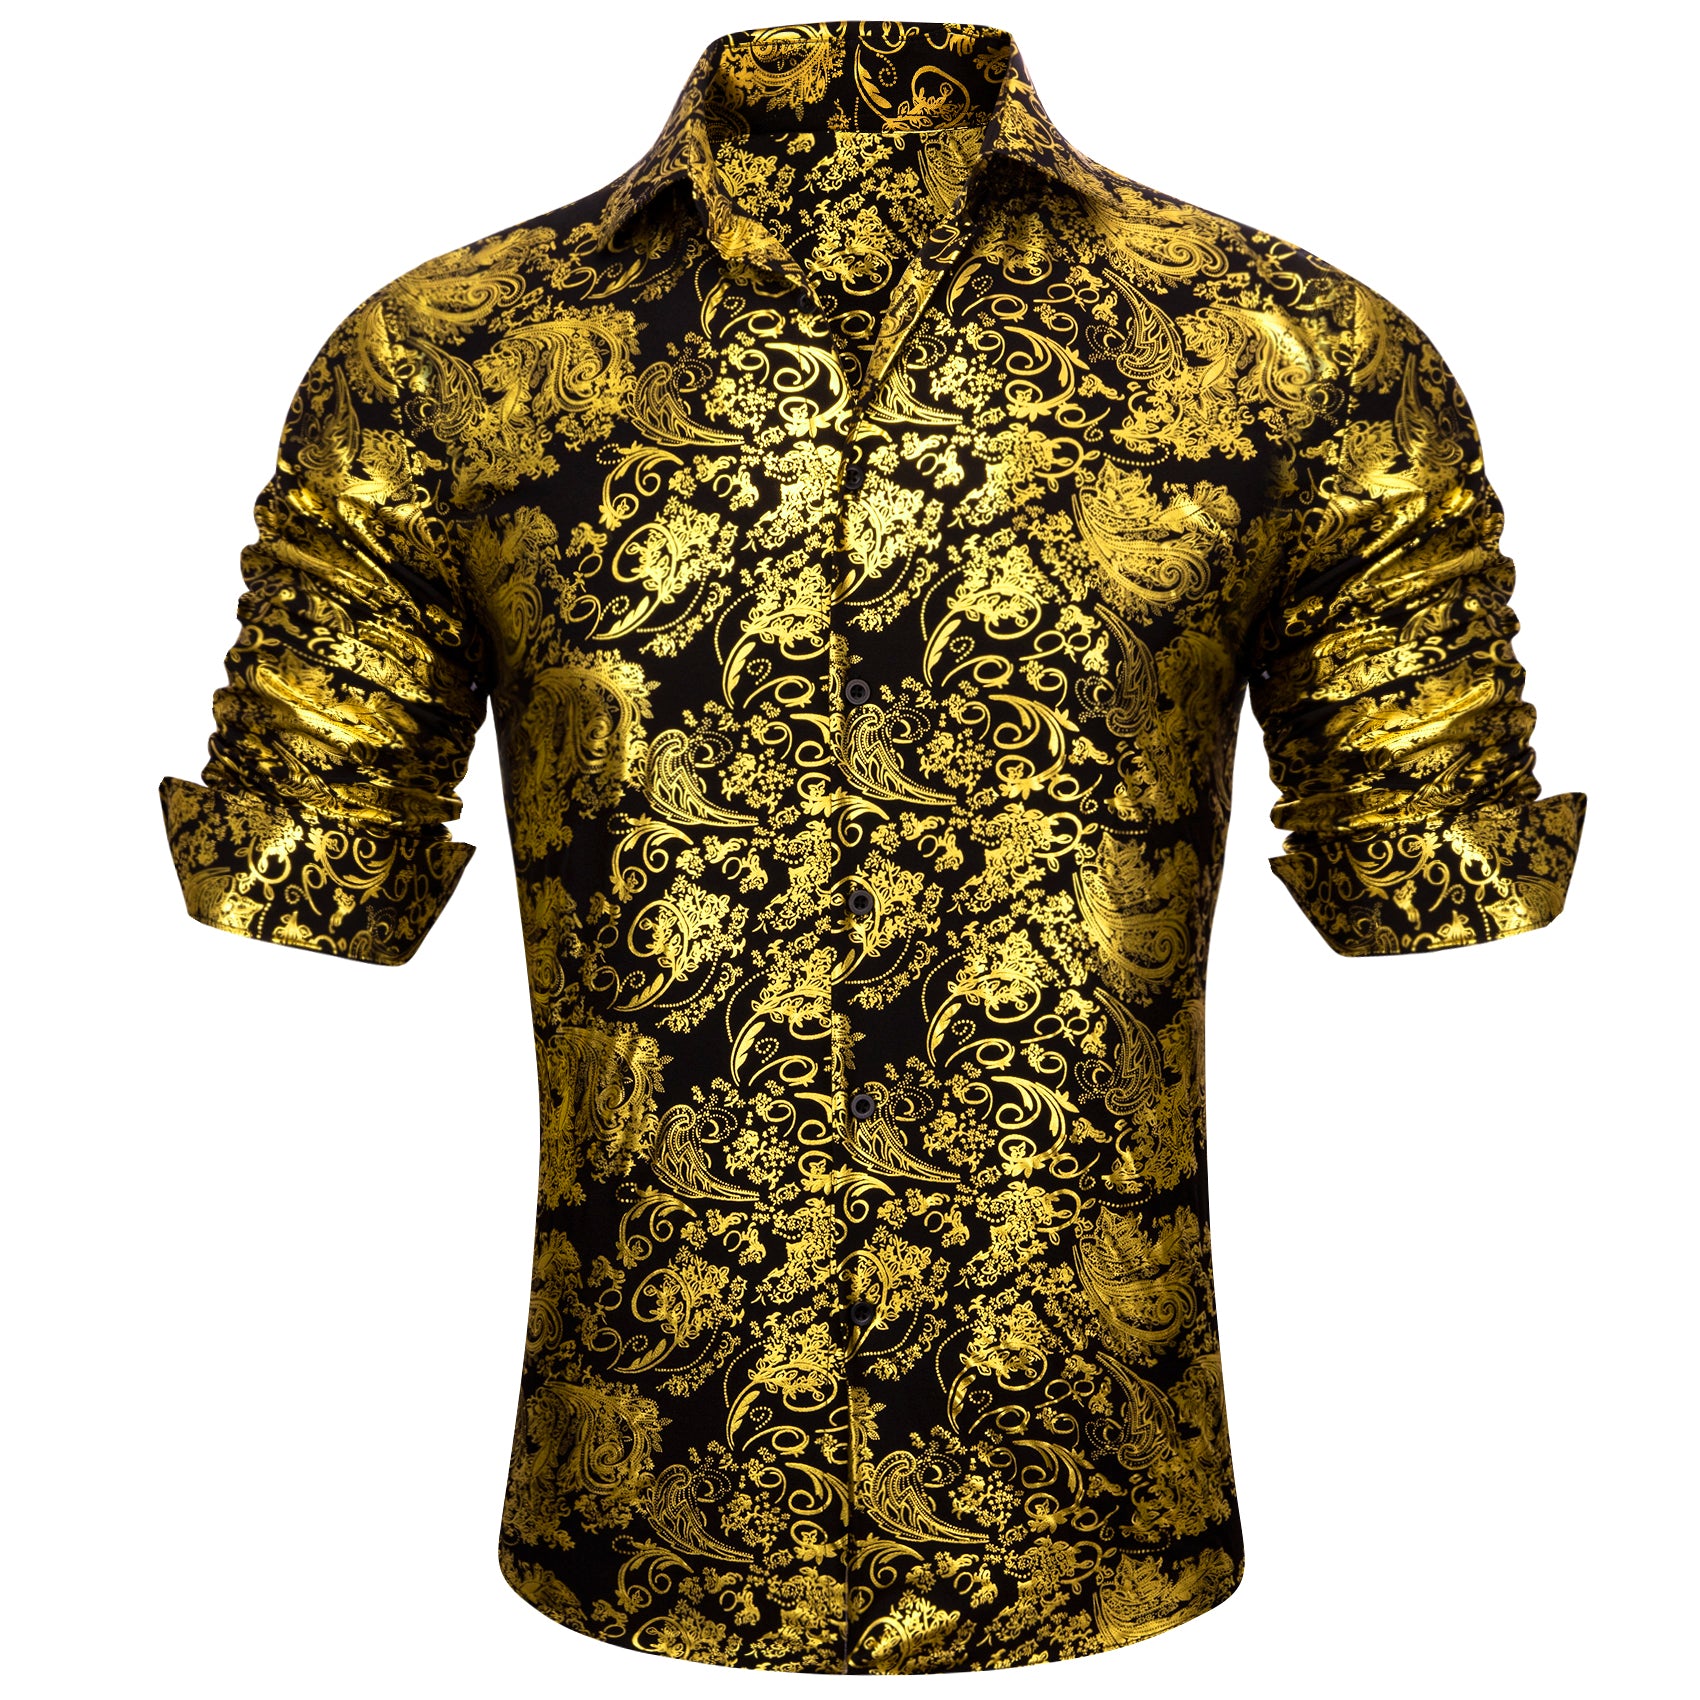 Barry.wang Button Down Shirt Classy Gold Black Paisley Silk Men's Shirt